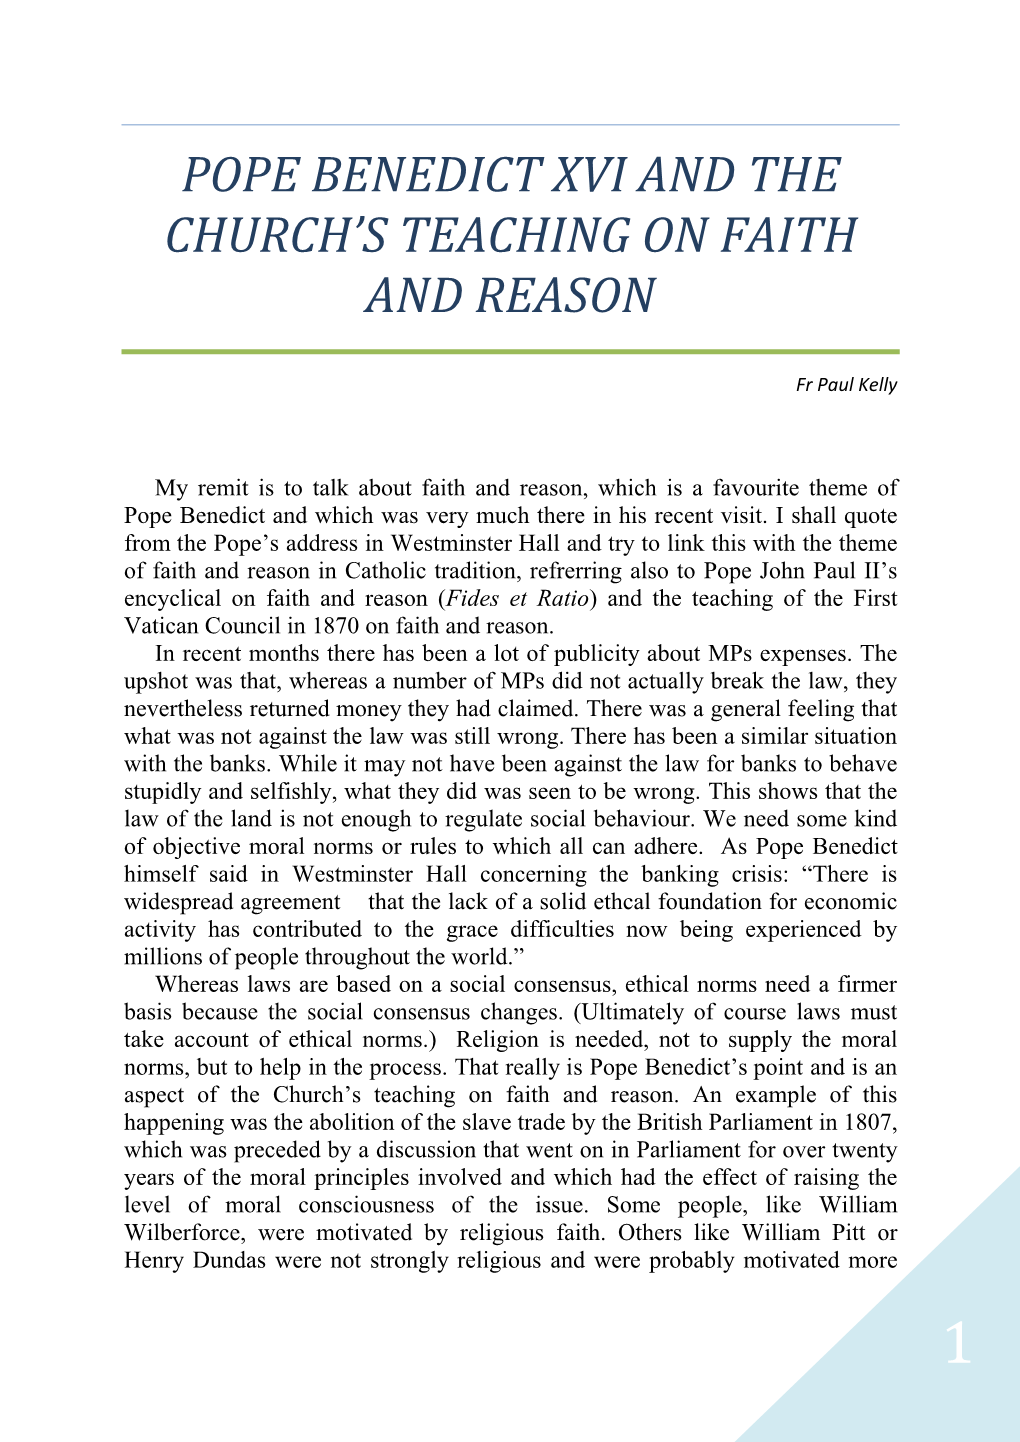 Pope Benedict Xvi and the Church's Teaching on Faith